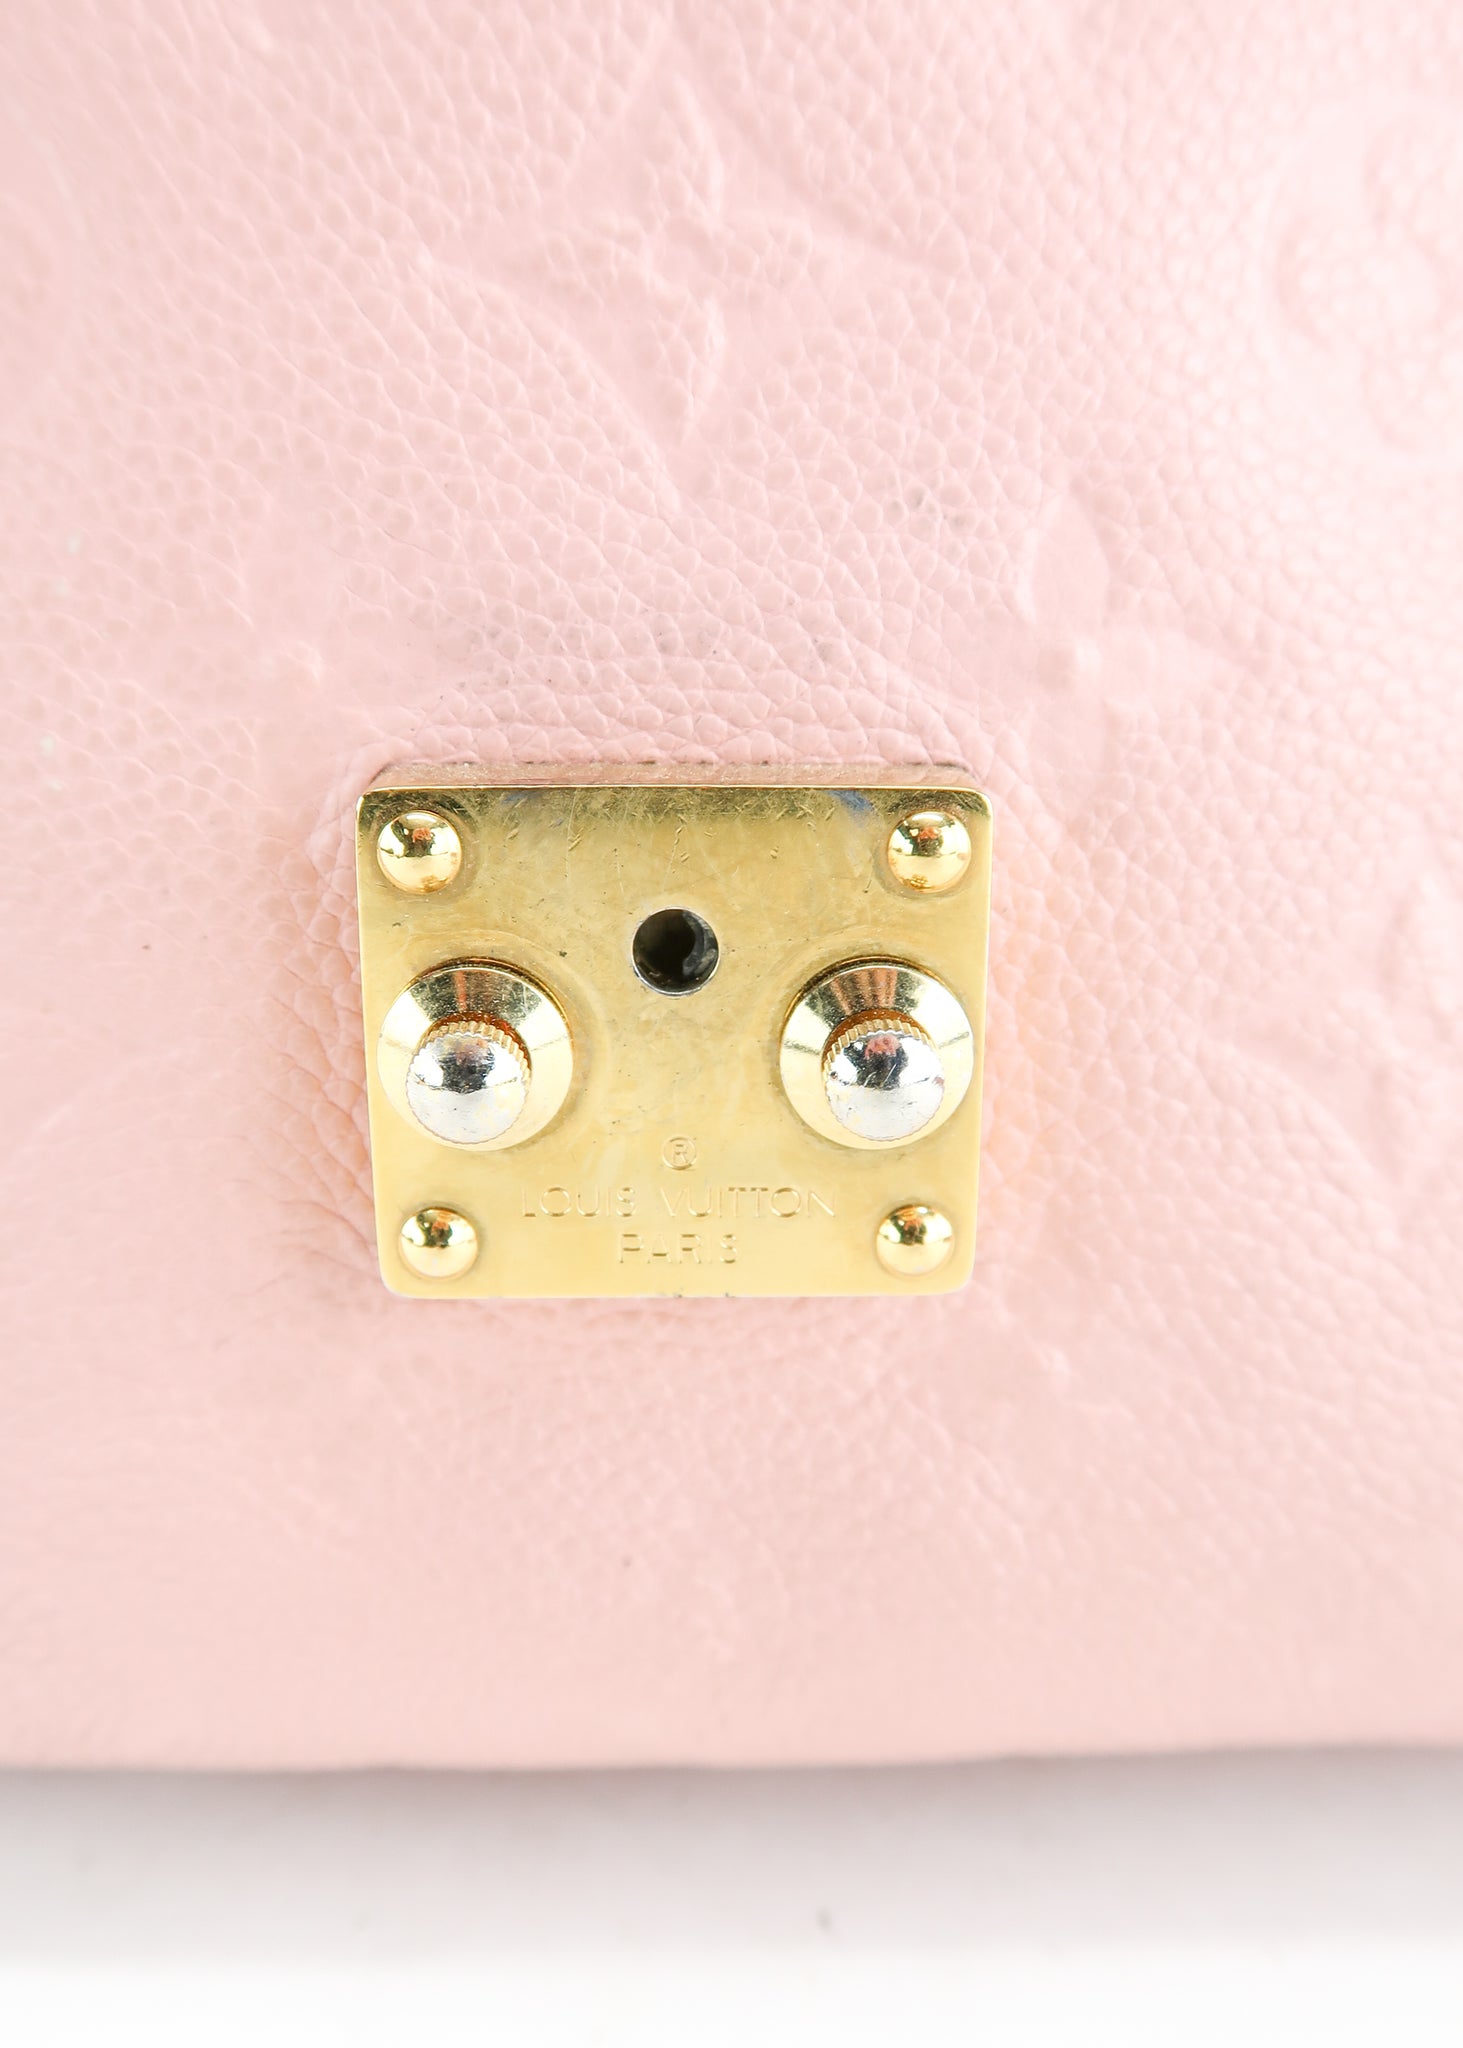 Louis Vuitton Adjustable Shoulder Strap in Rose Ballerine Calfskin - SOLD